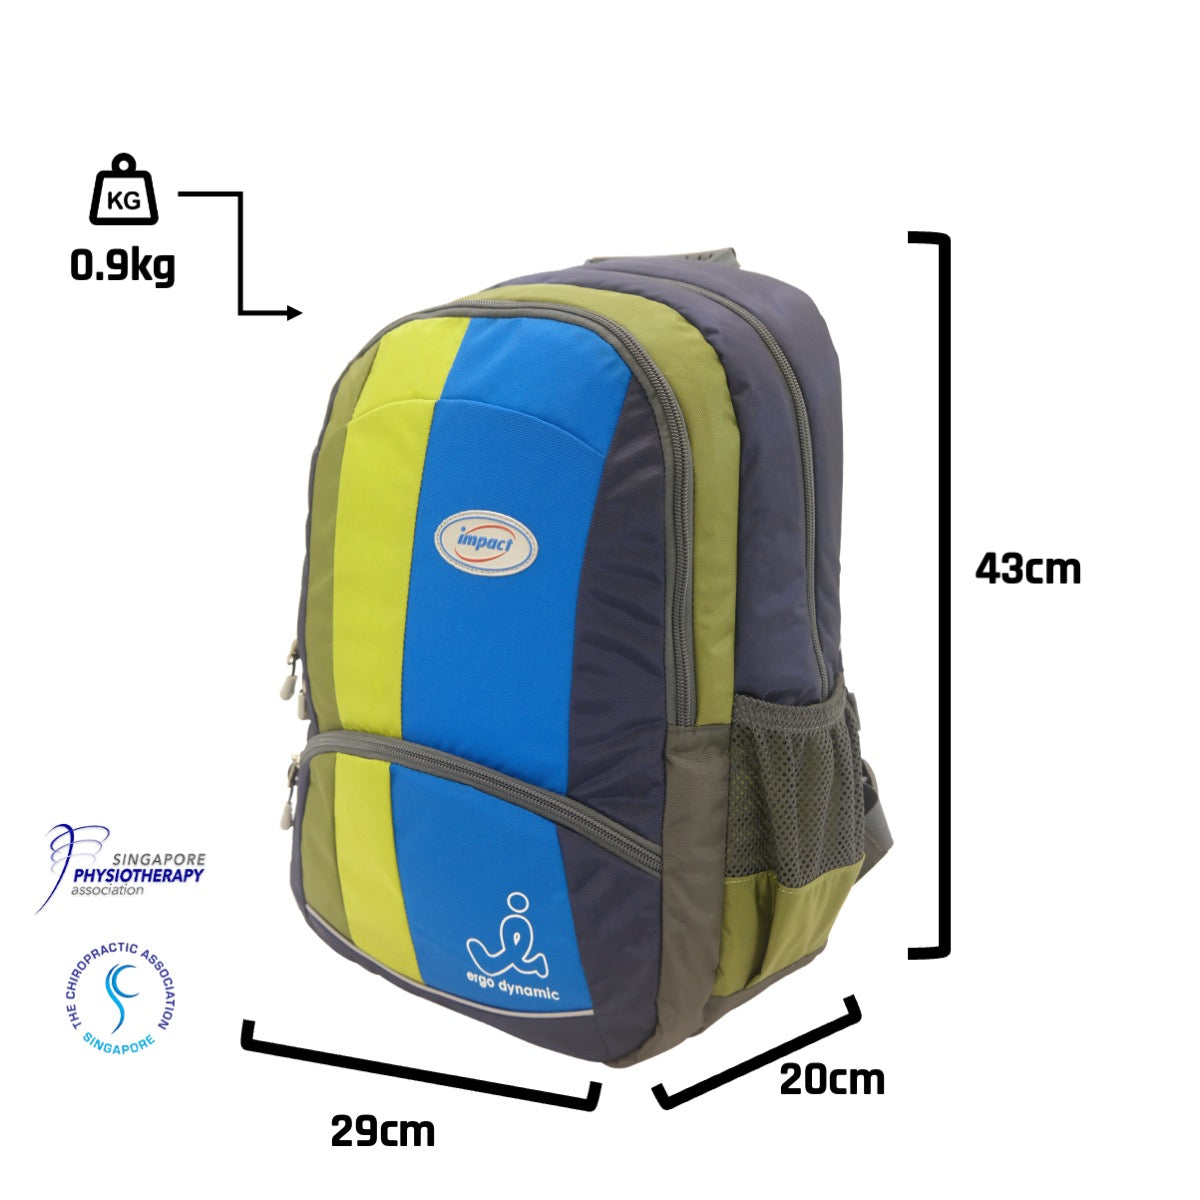 Impact School Bag IPEG-130 - Ergo-Comfort Spinal Protection Backpack